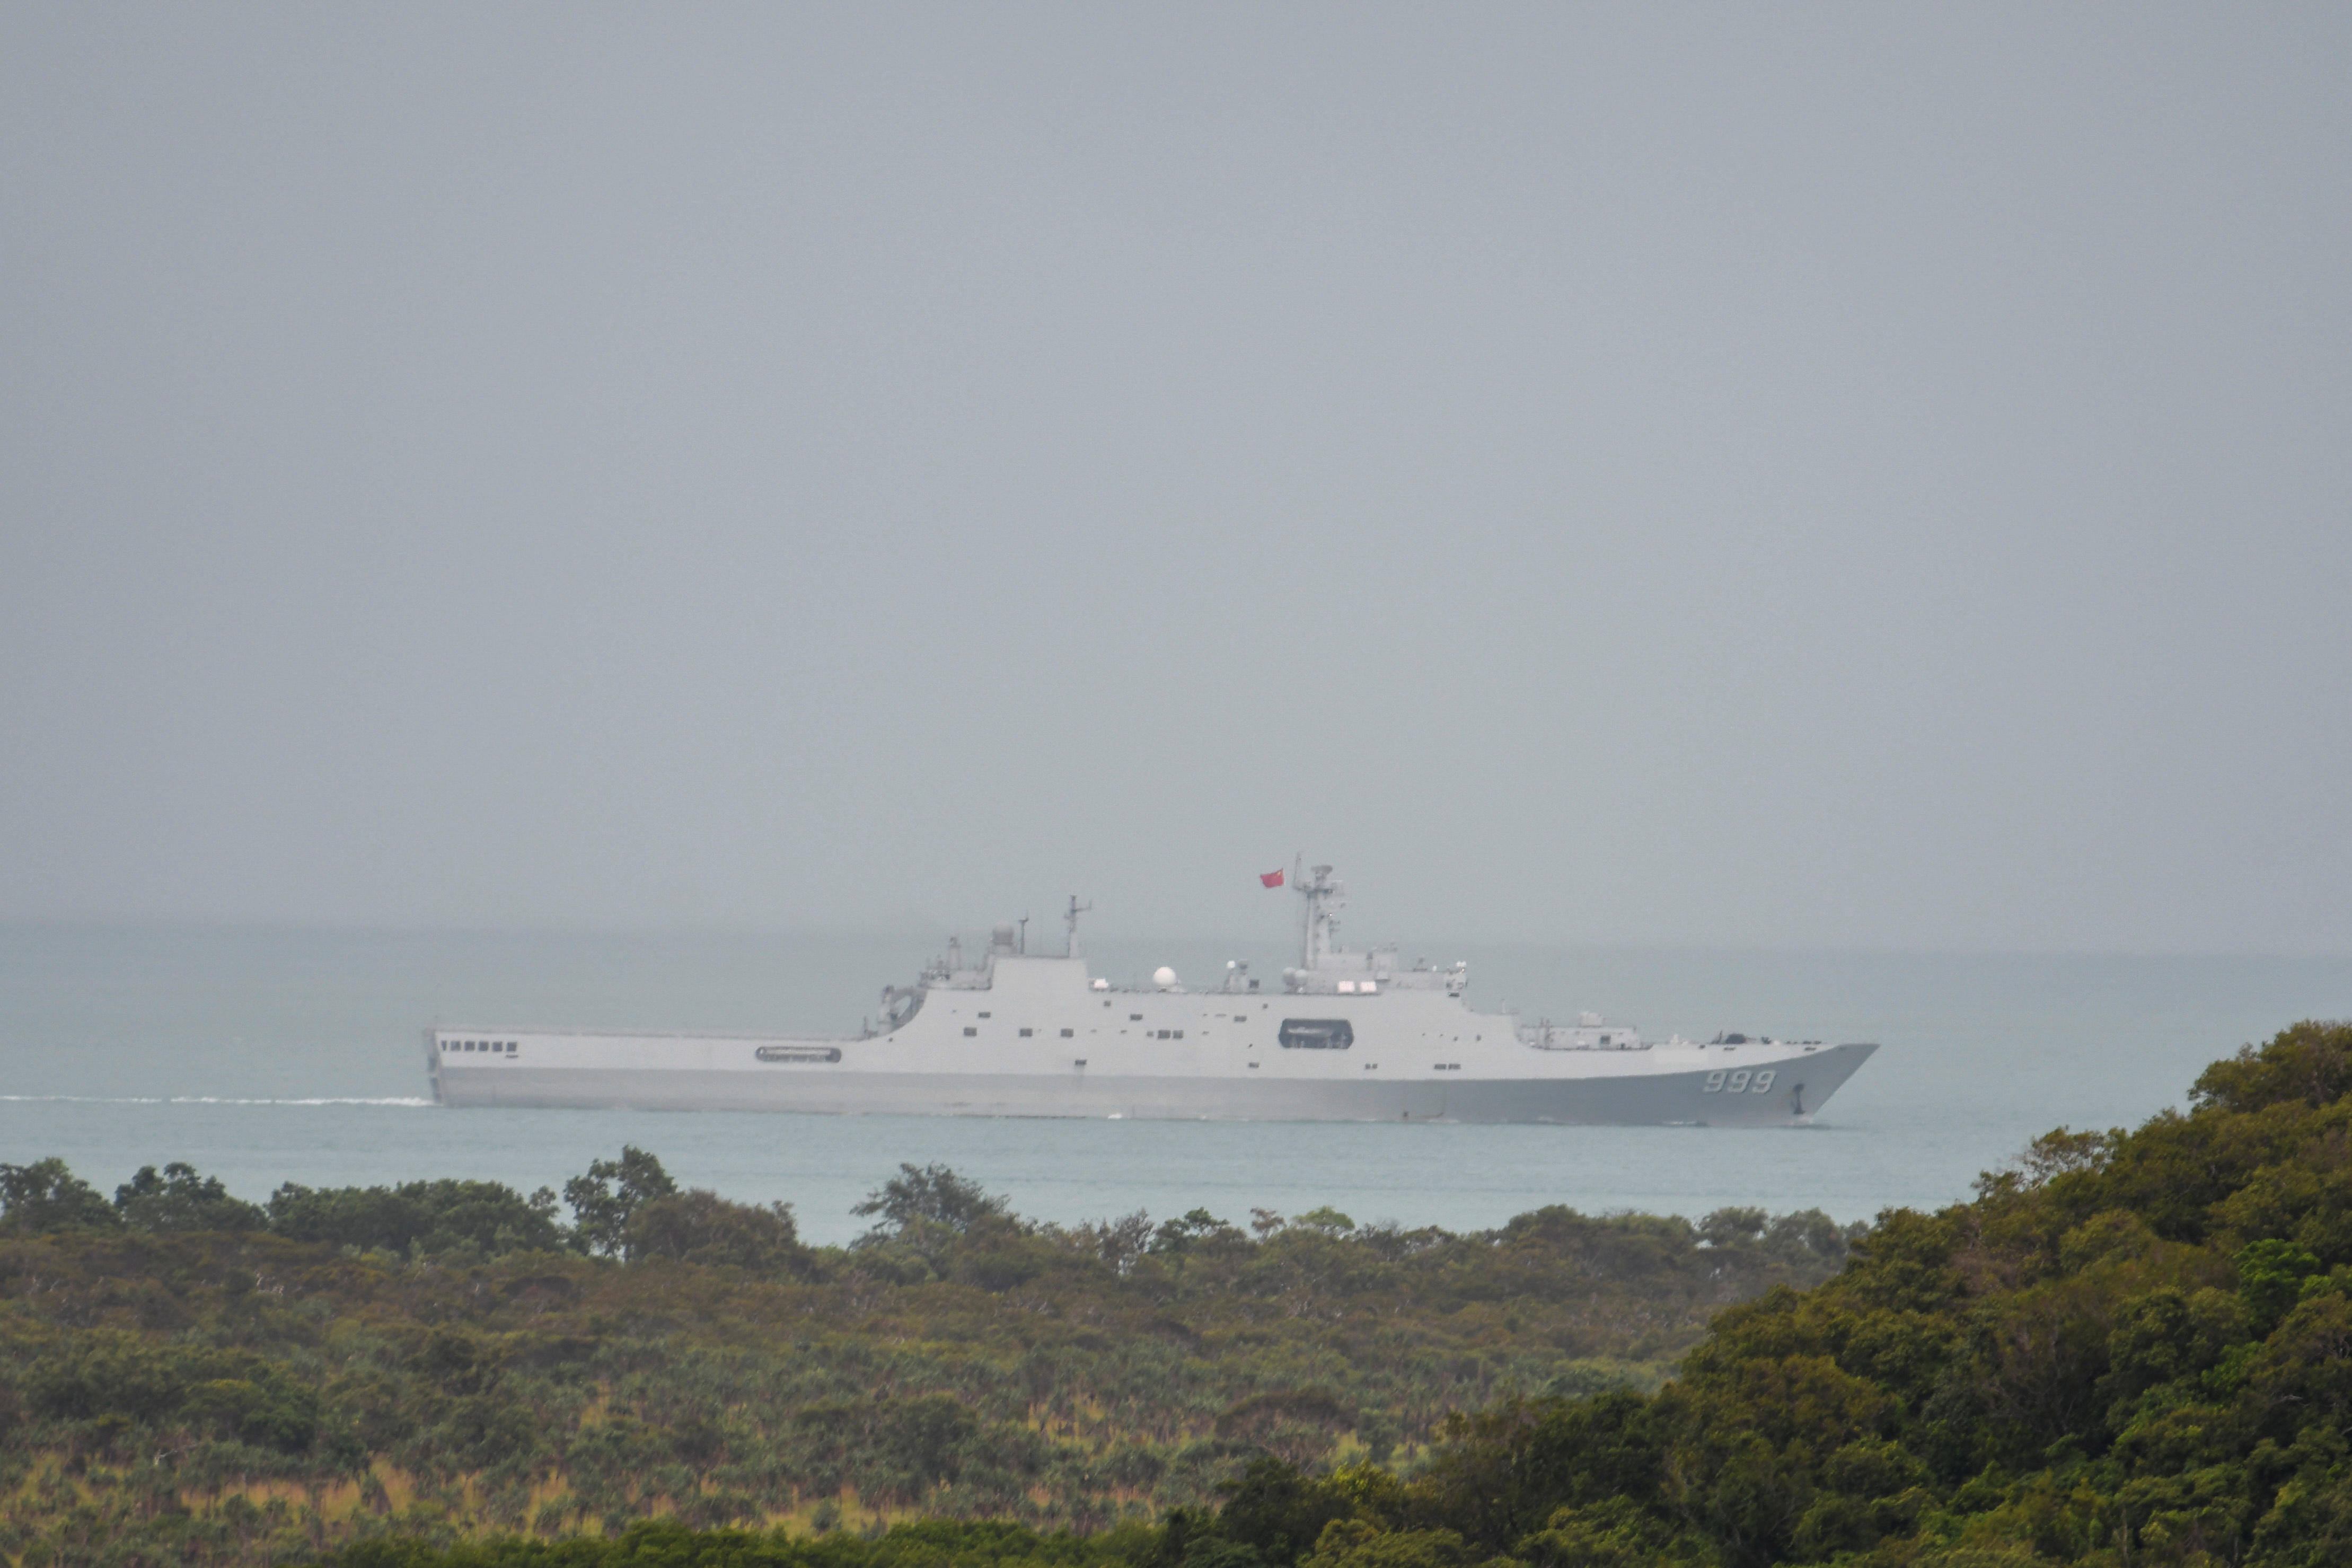 A PLA-N Yuzhao-class amphibious transport dock vessel transits the Torres Strait